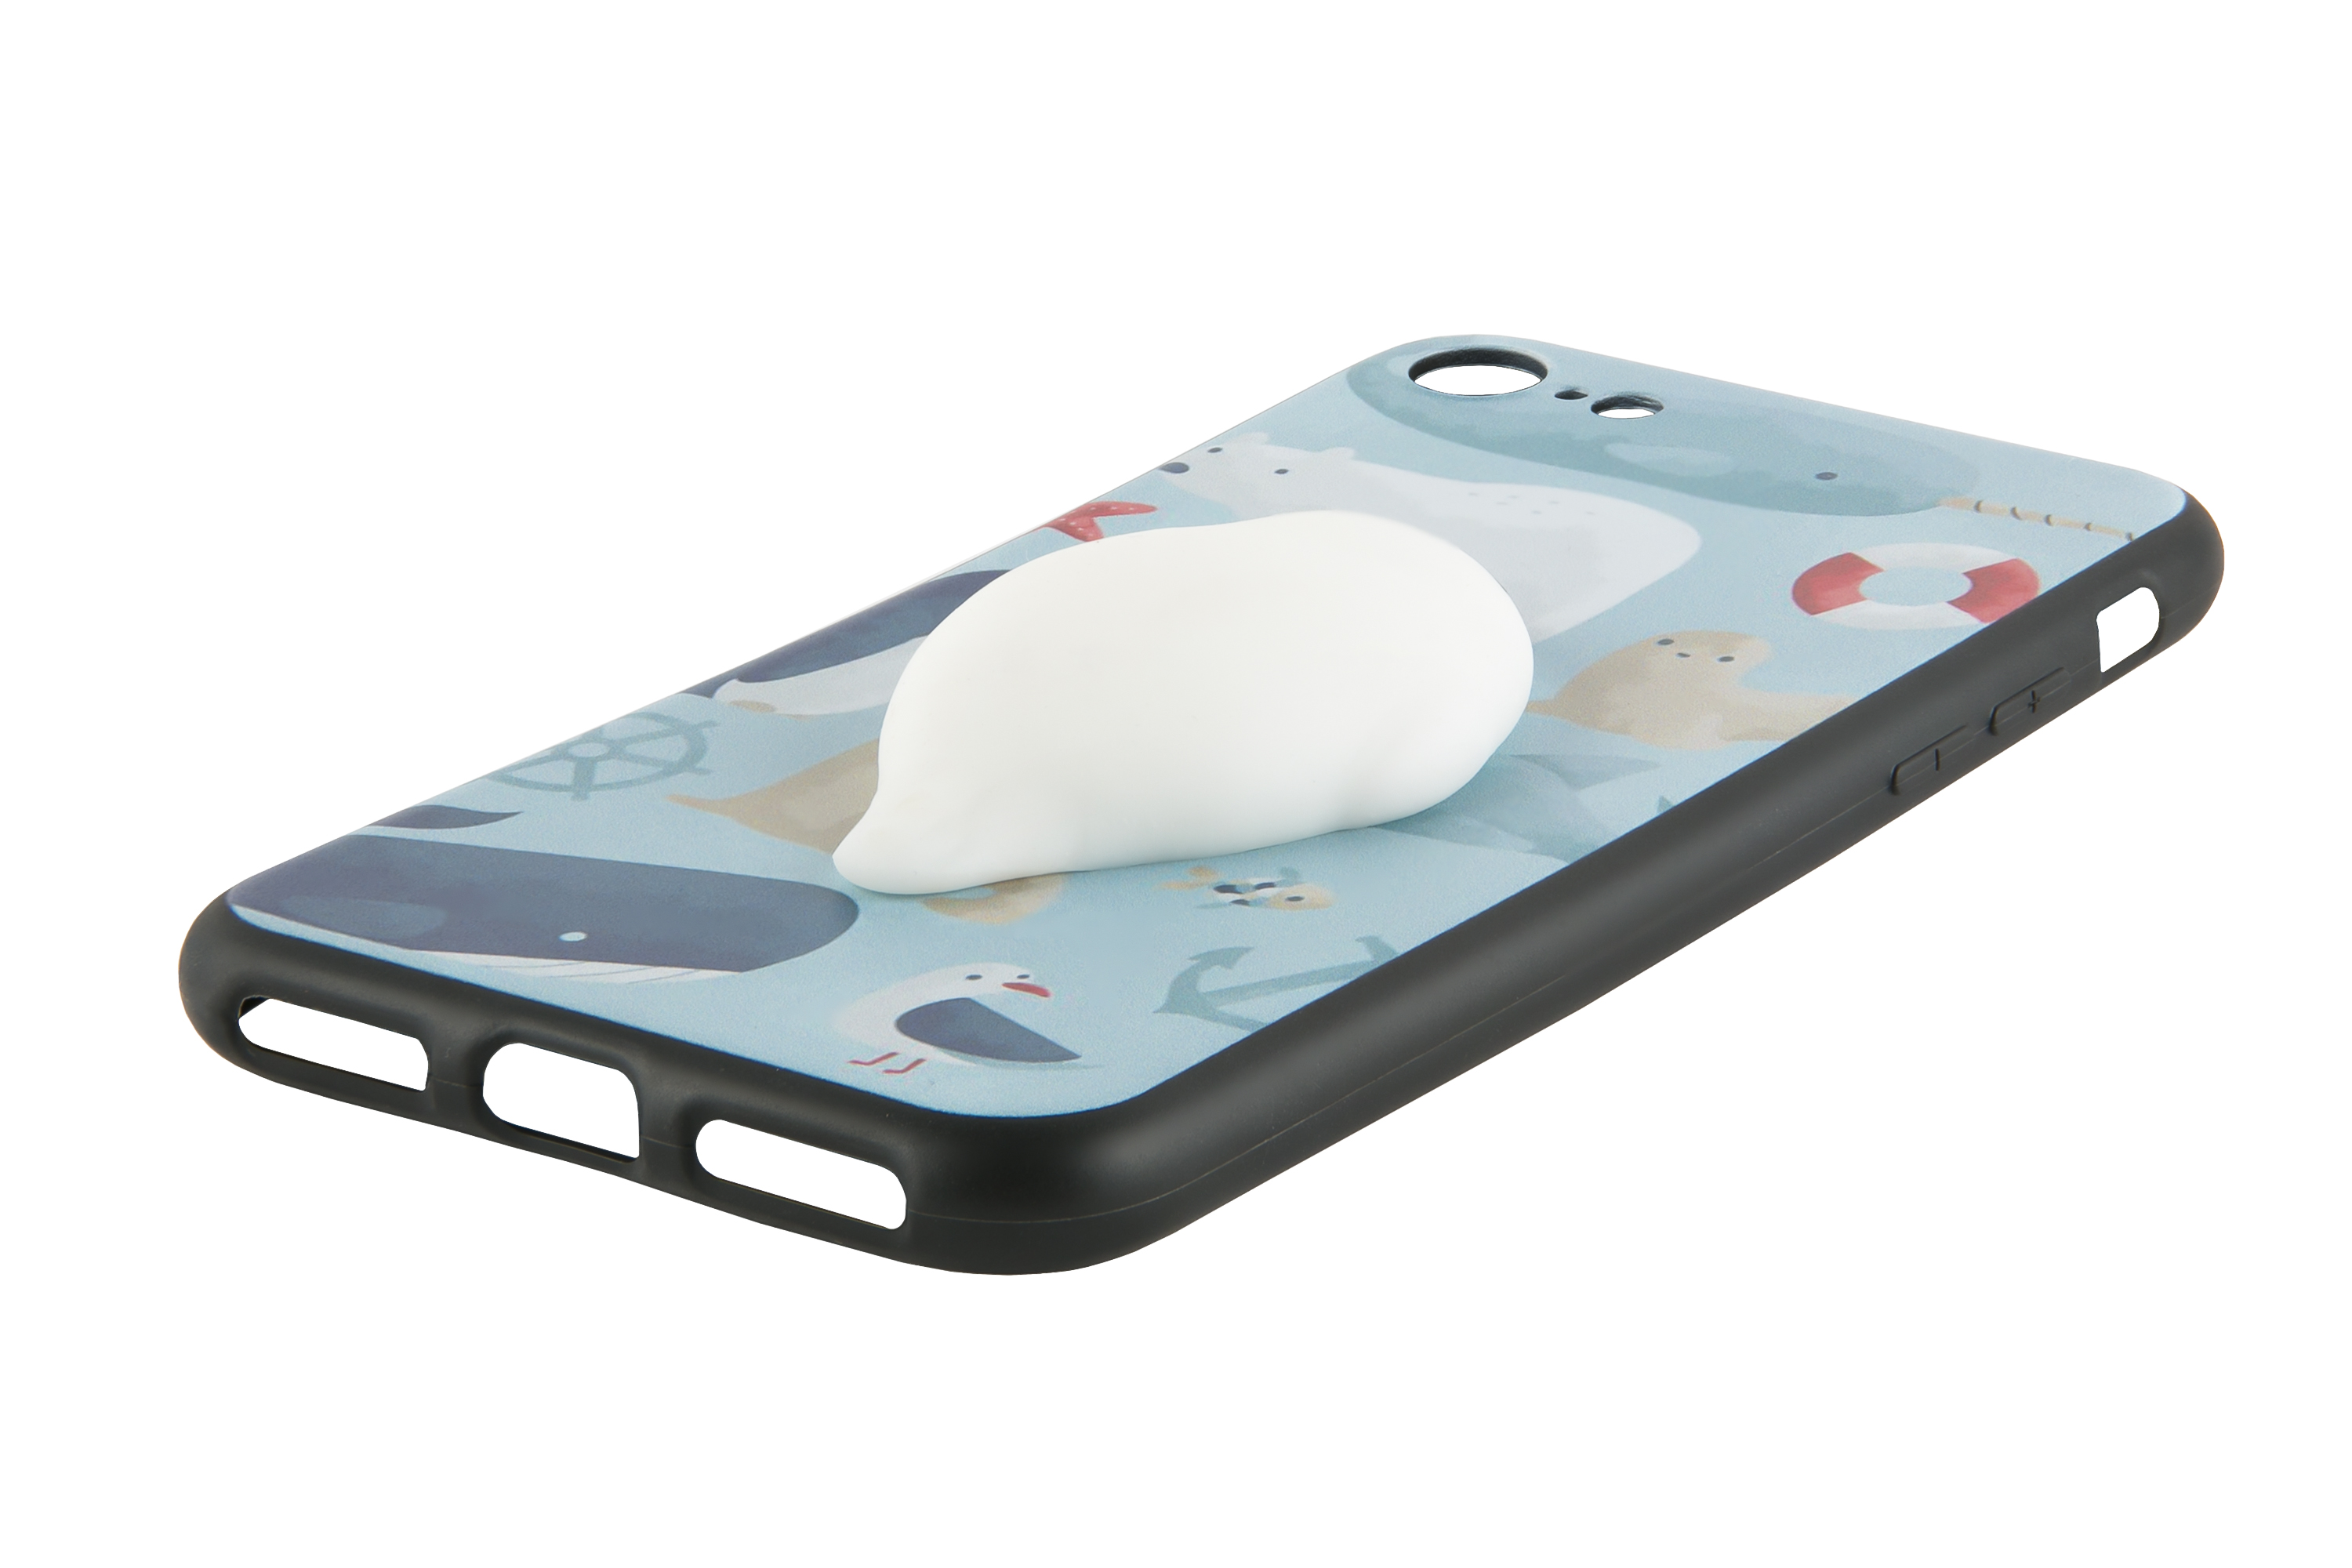 Накладка силикон iBox Crystal Jelly Case для Apple iPhone 8, дизайн №10